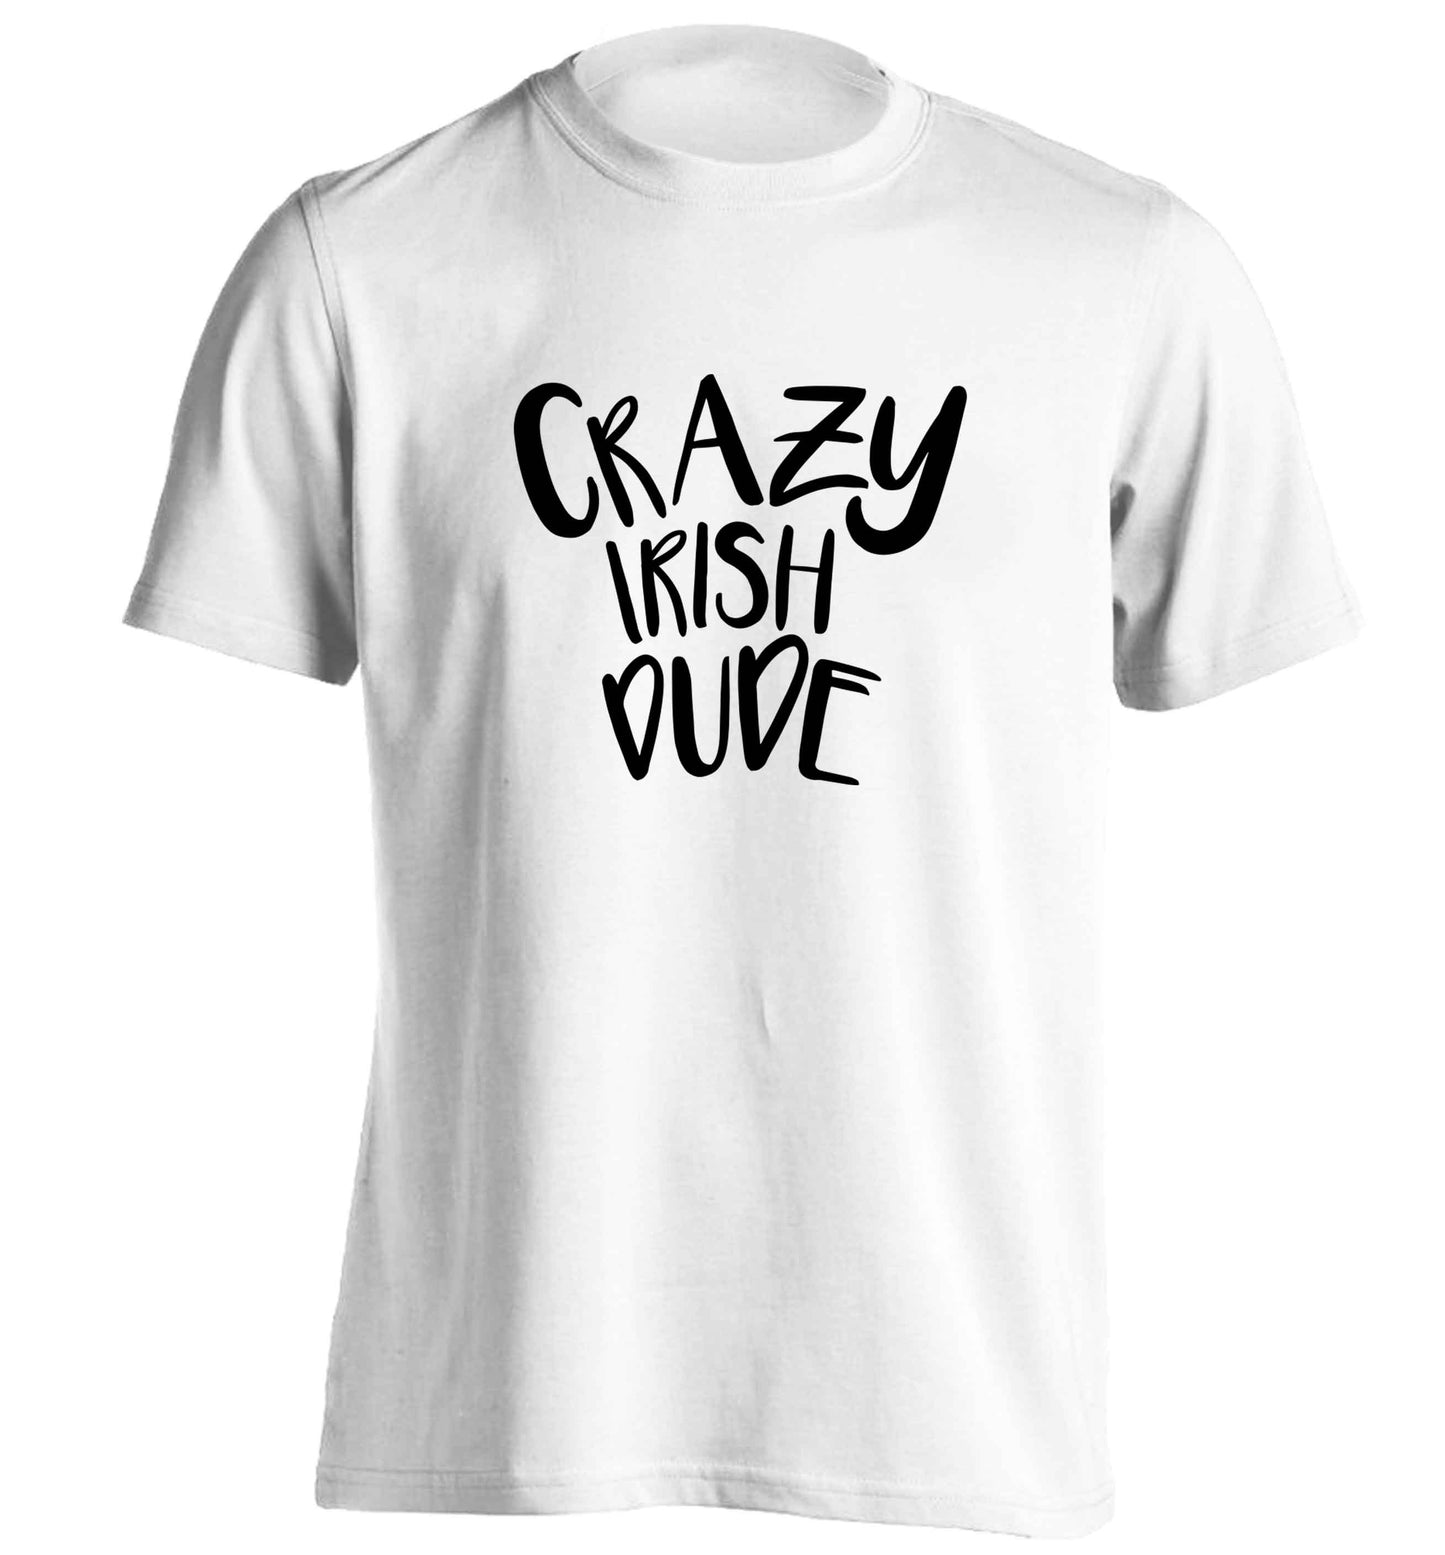 Crazy Irish dude adults unisex white Tshirt 2XL